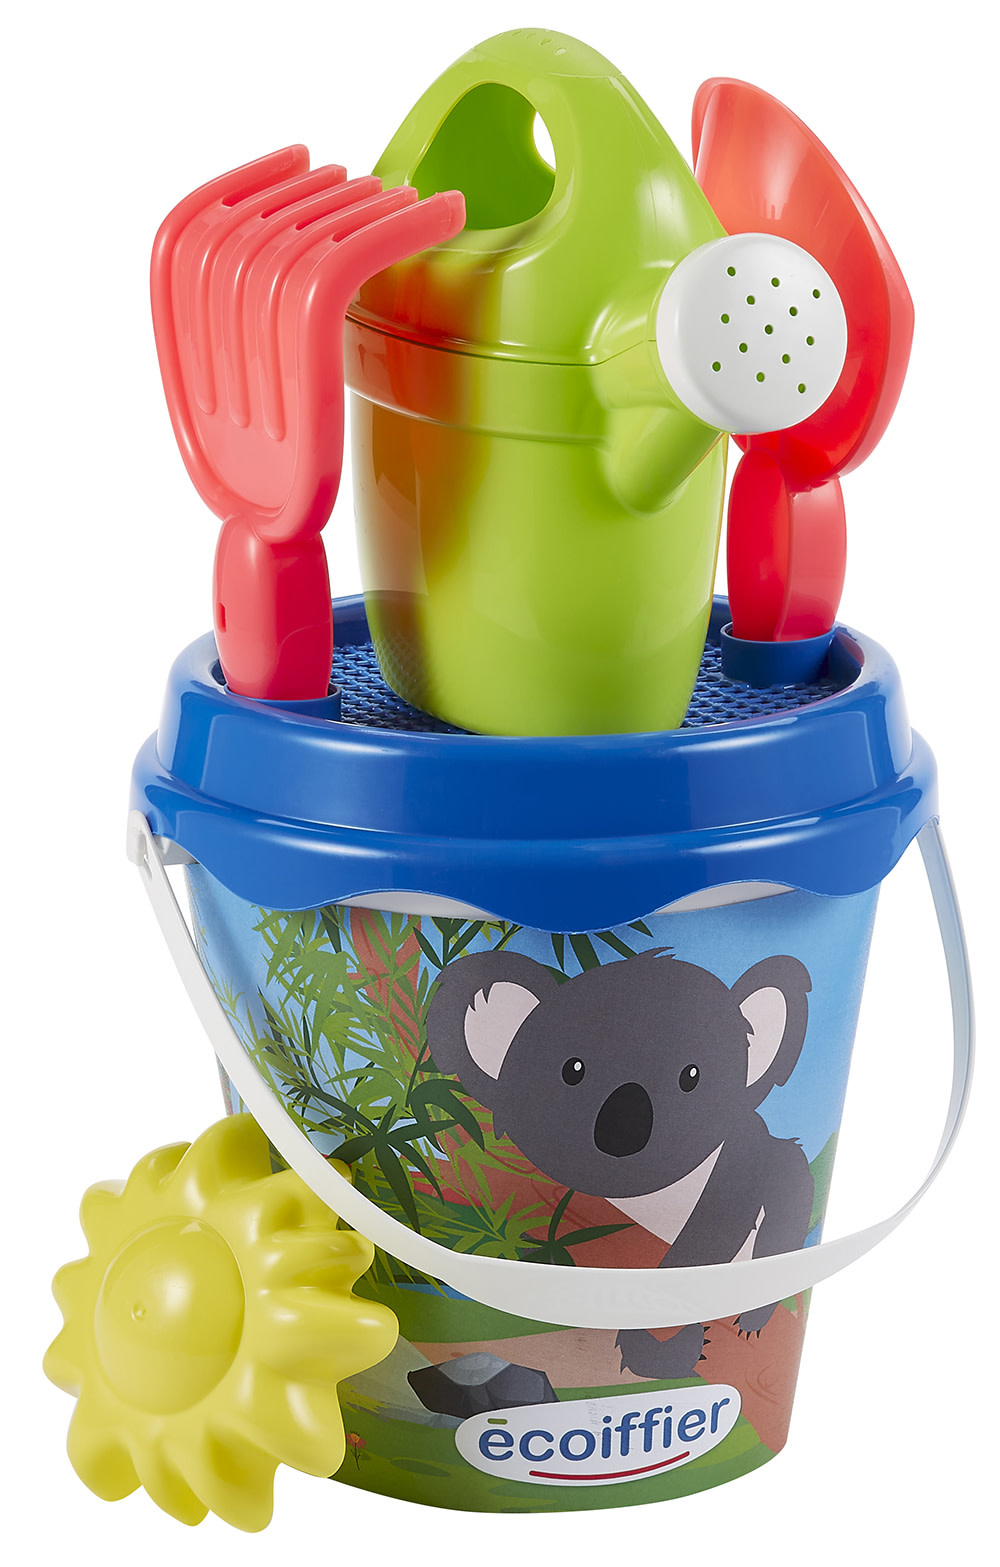 ecoiffer Koala bucket with accessories 17 cm